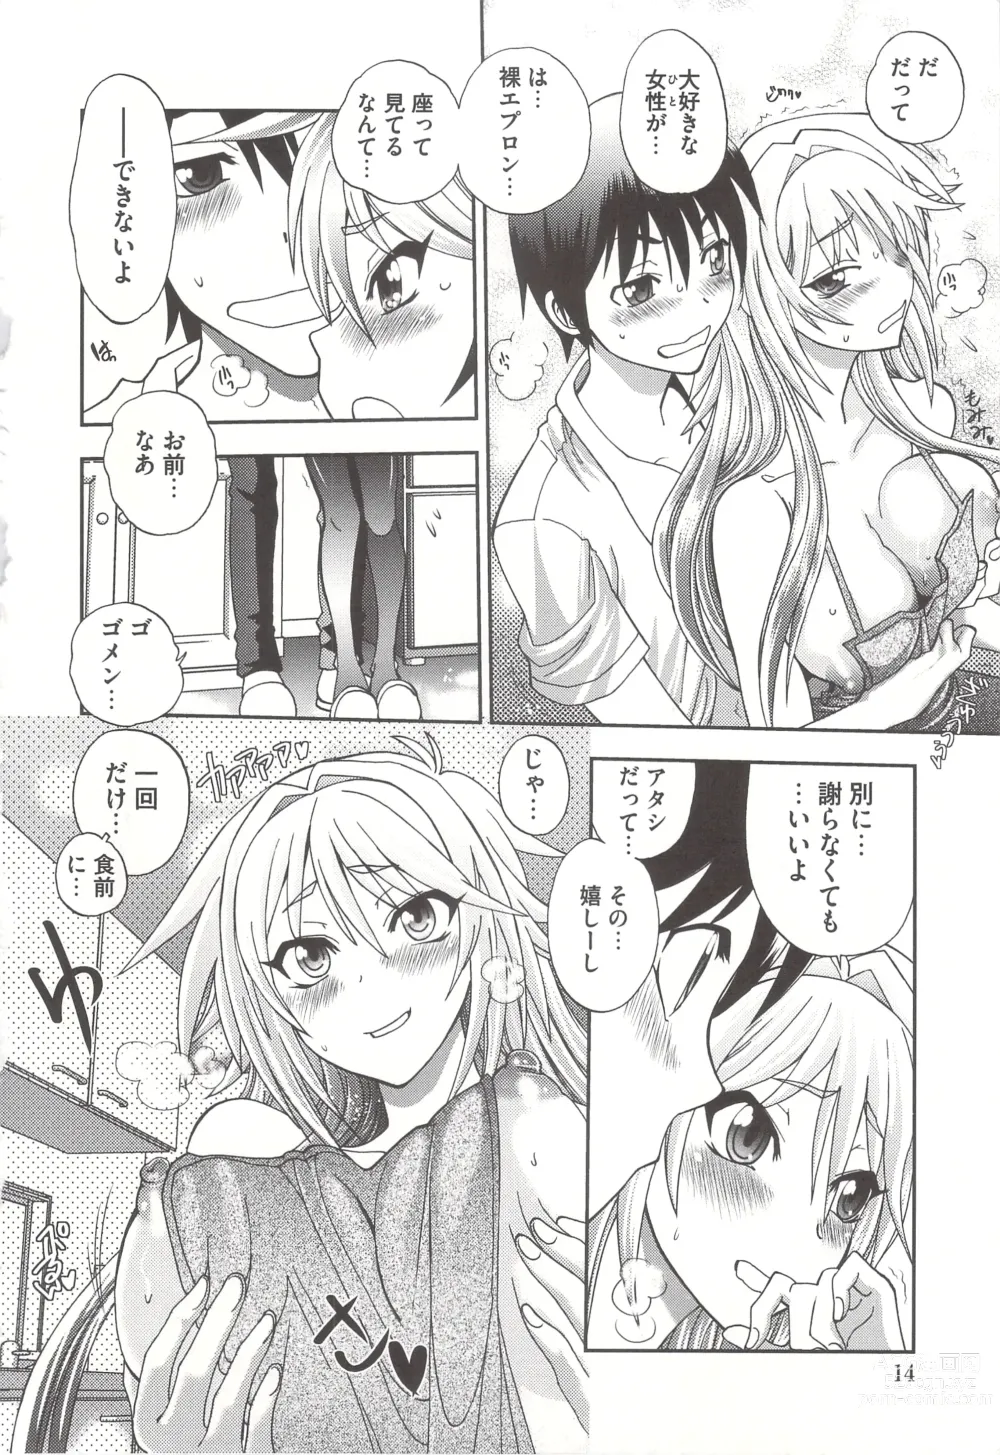 Page 16 of manga Tsujidou-san no Virgin Road Adult Edition